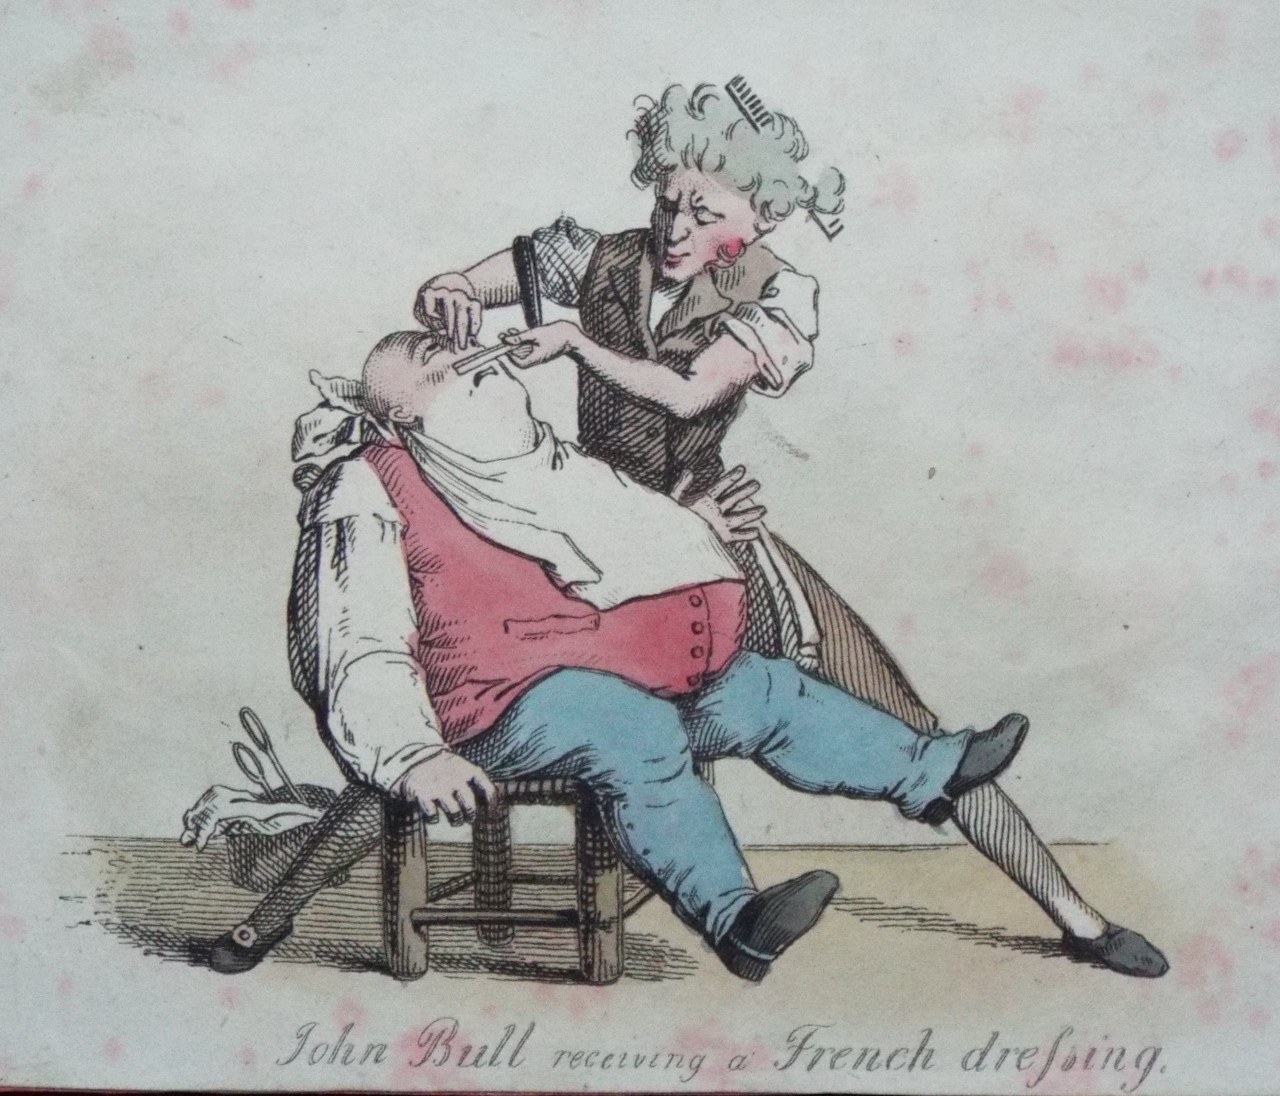 Etching - John Bull receiving a French dressing.